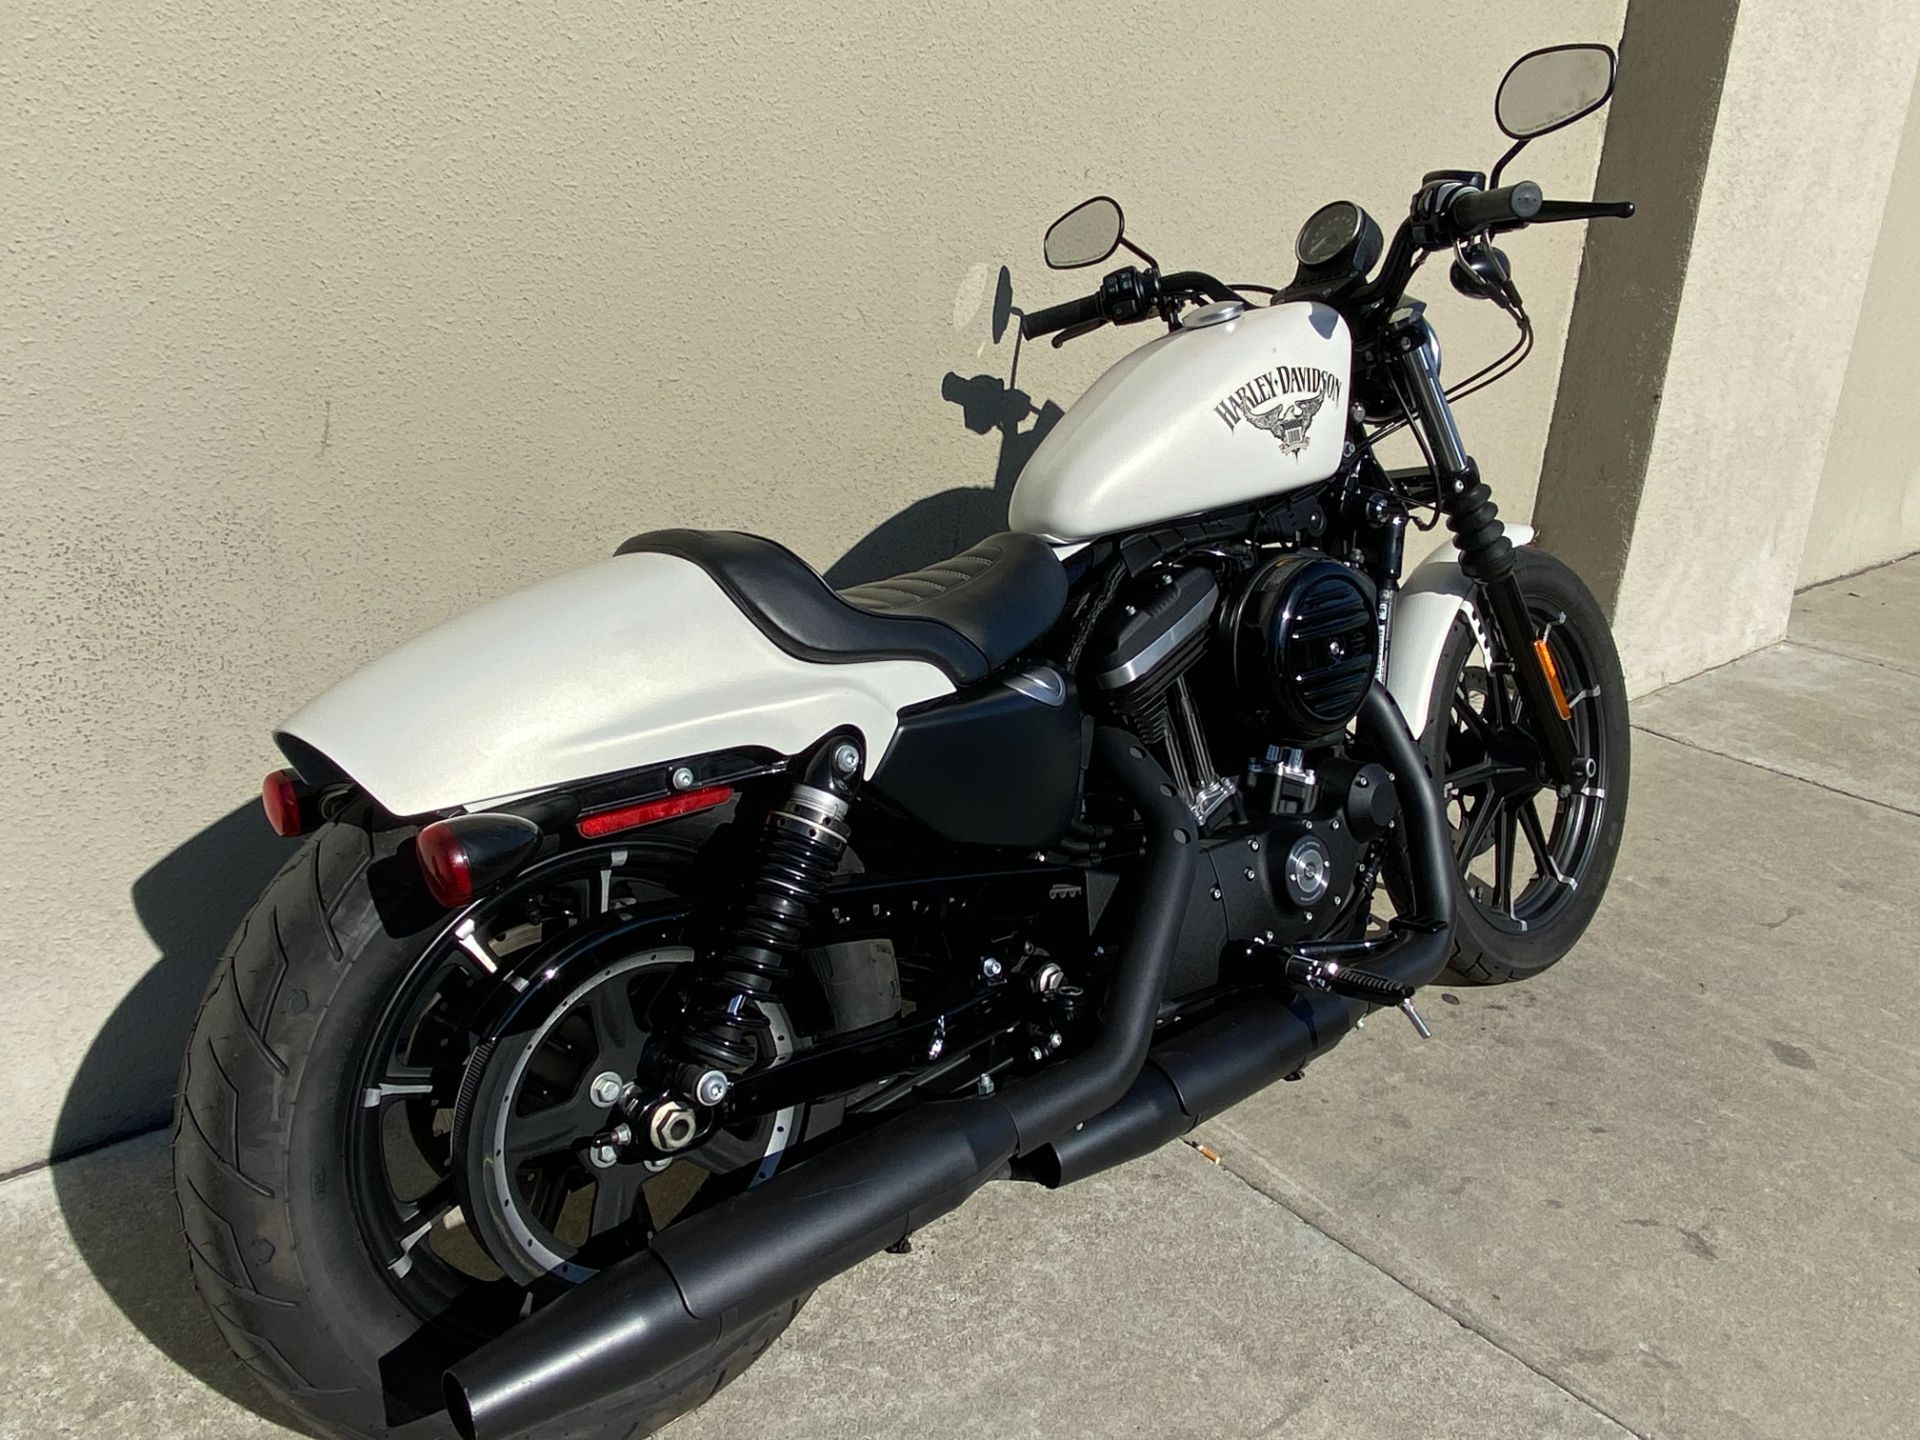 2018 Harley-Davidson Iron 883™ in San Jose, California - Photo 3